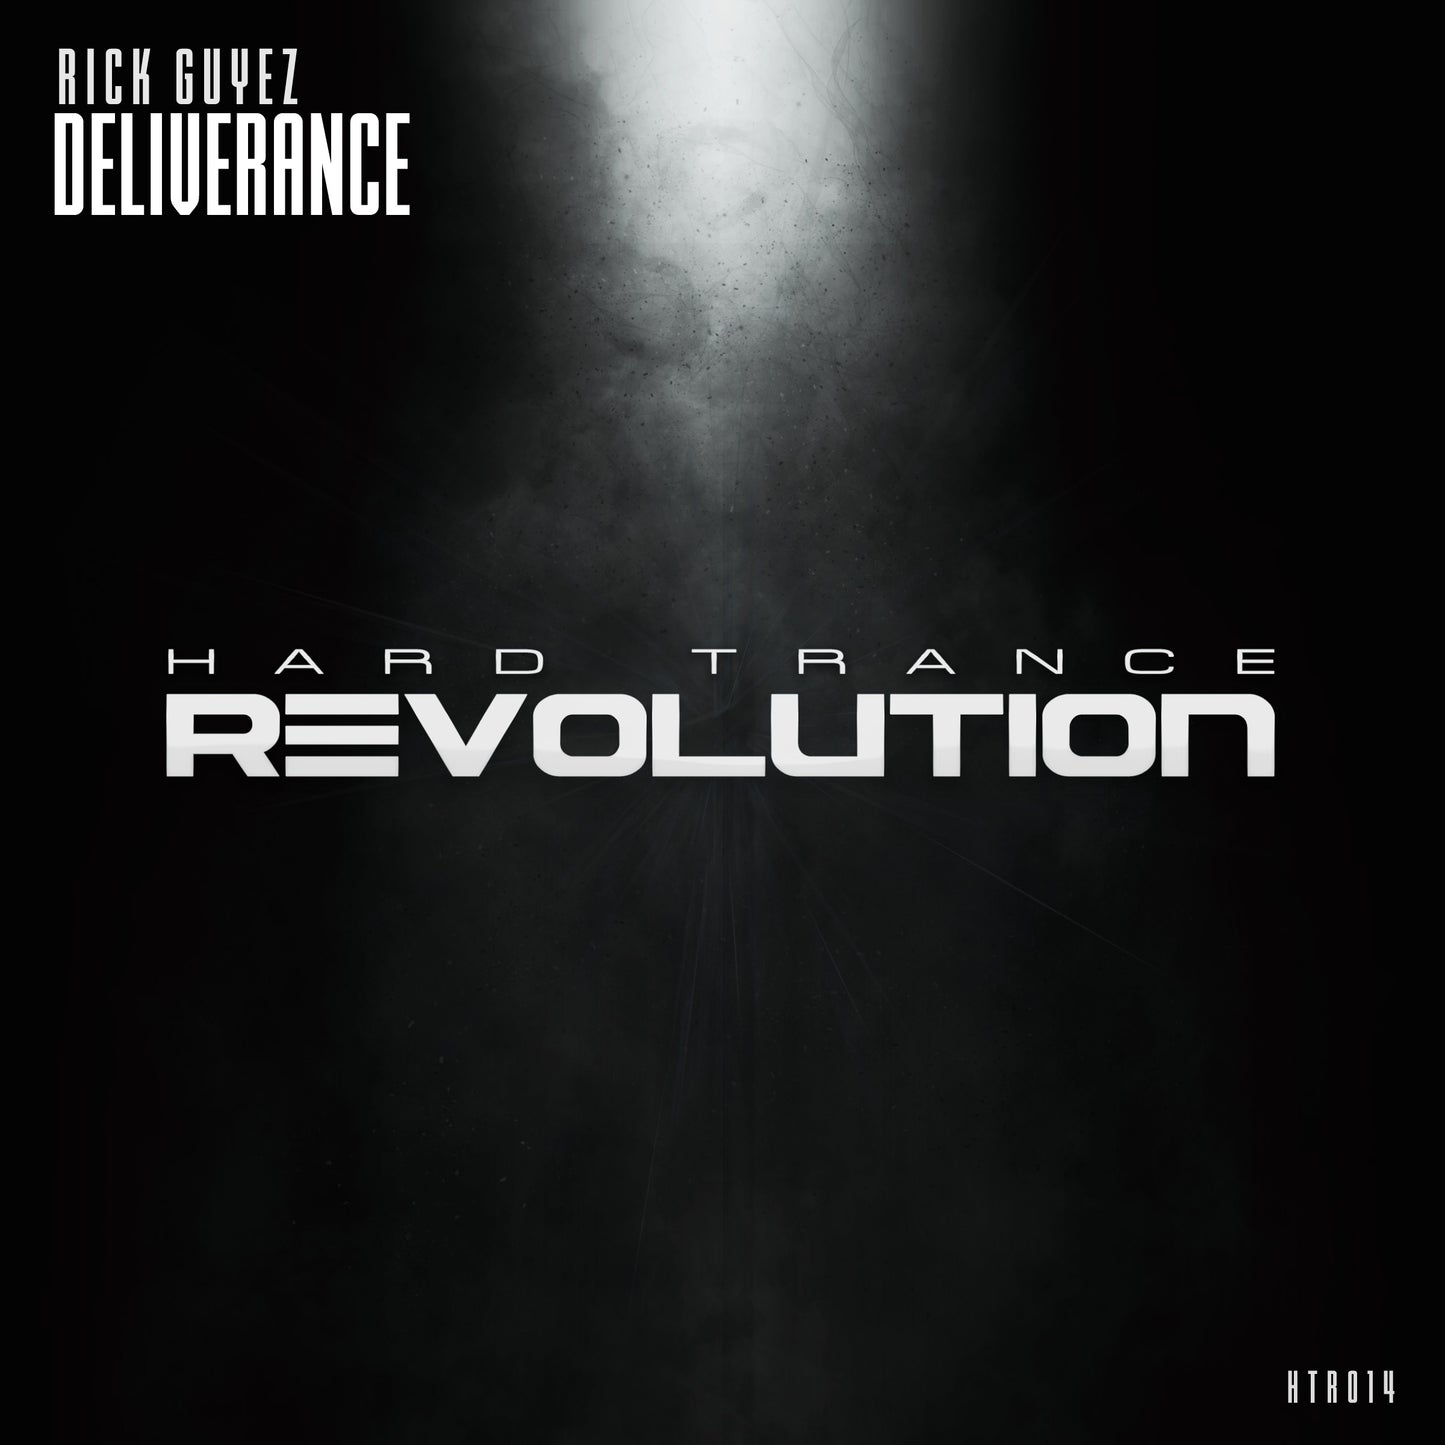 HTR014 - Rick Guyez - Deliverance (Extended Mix)